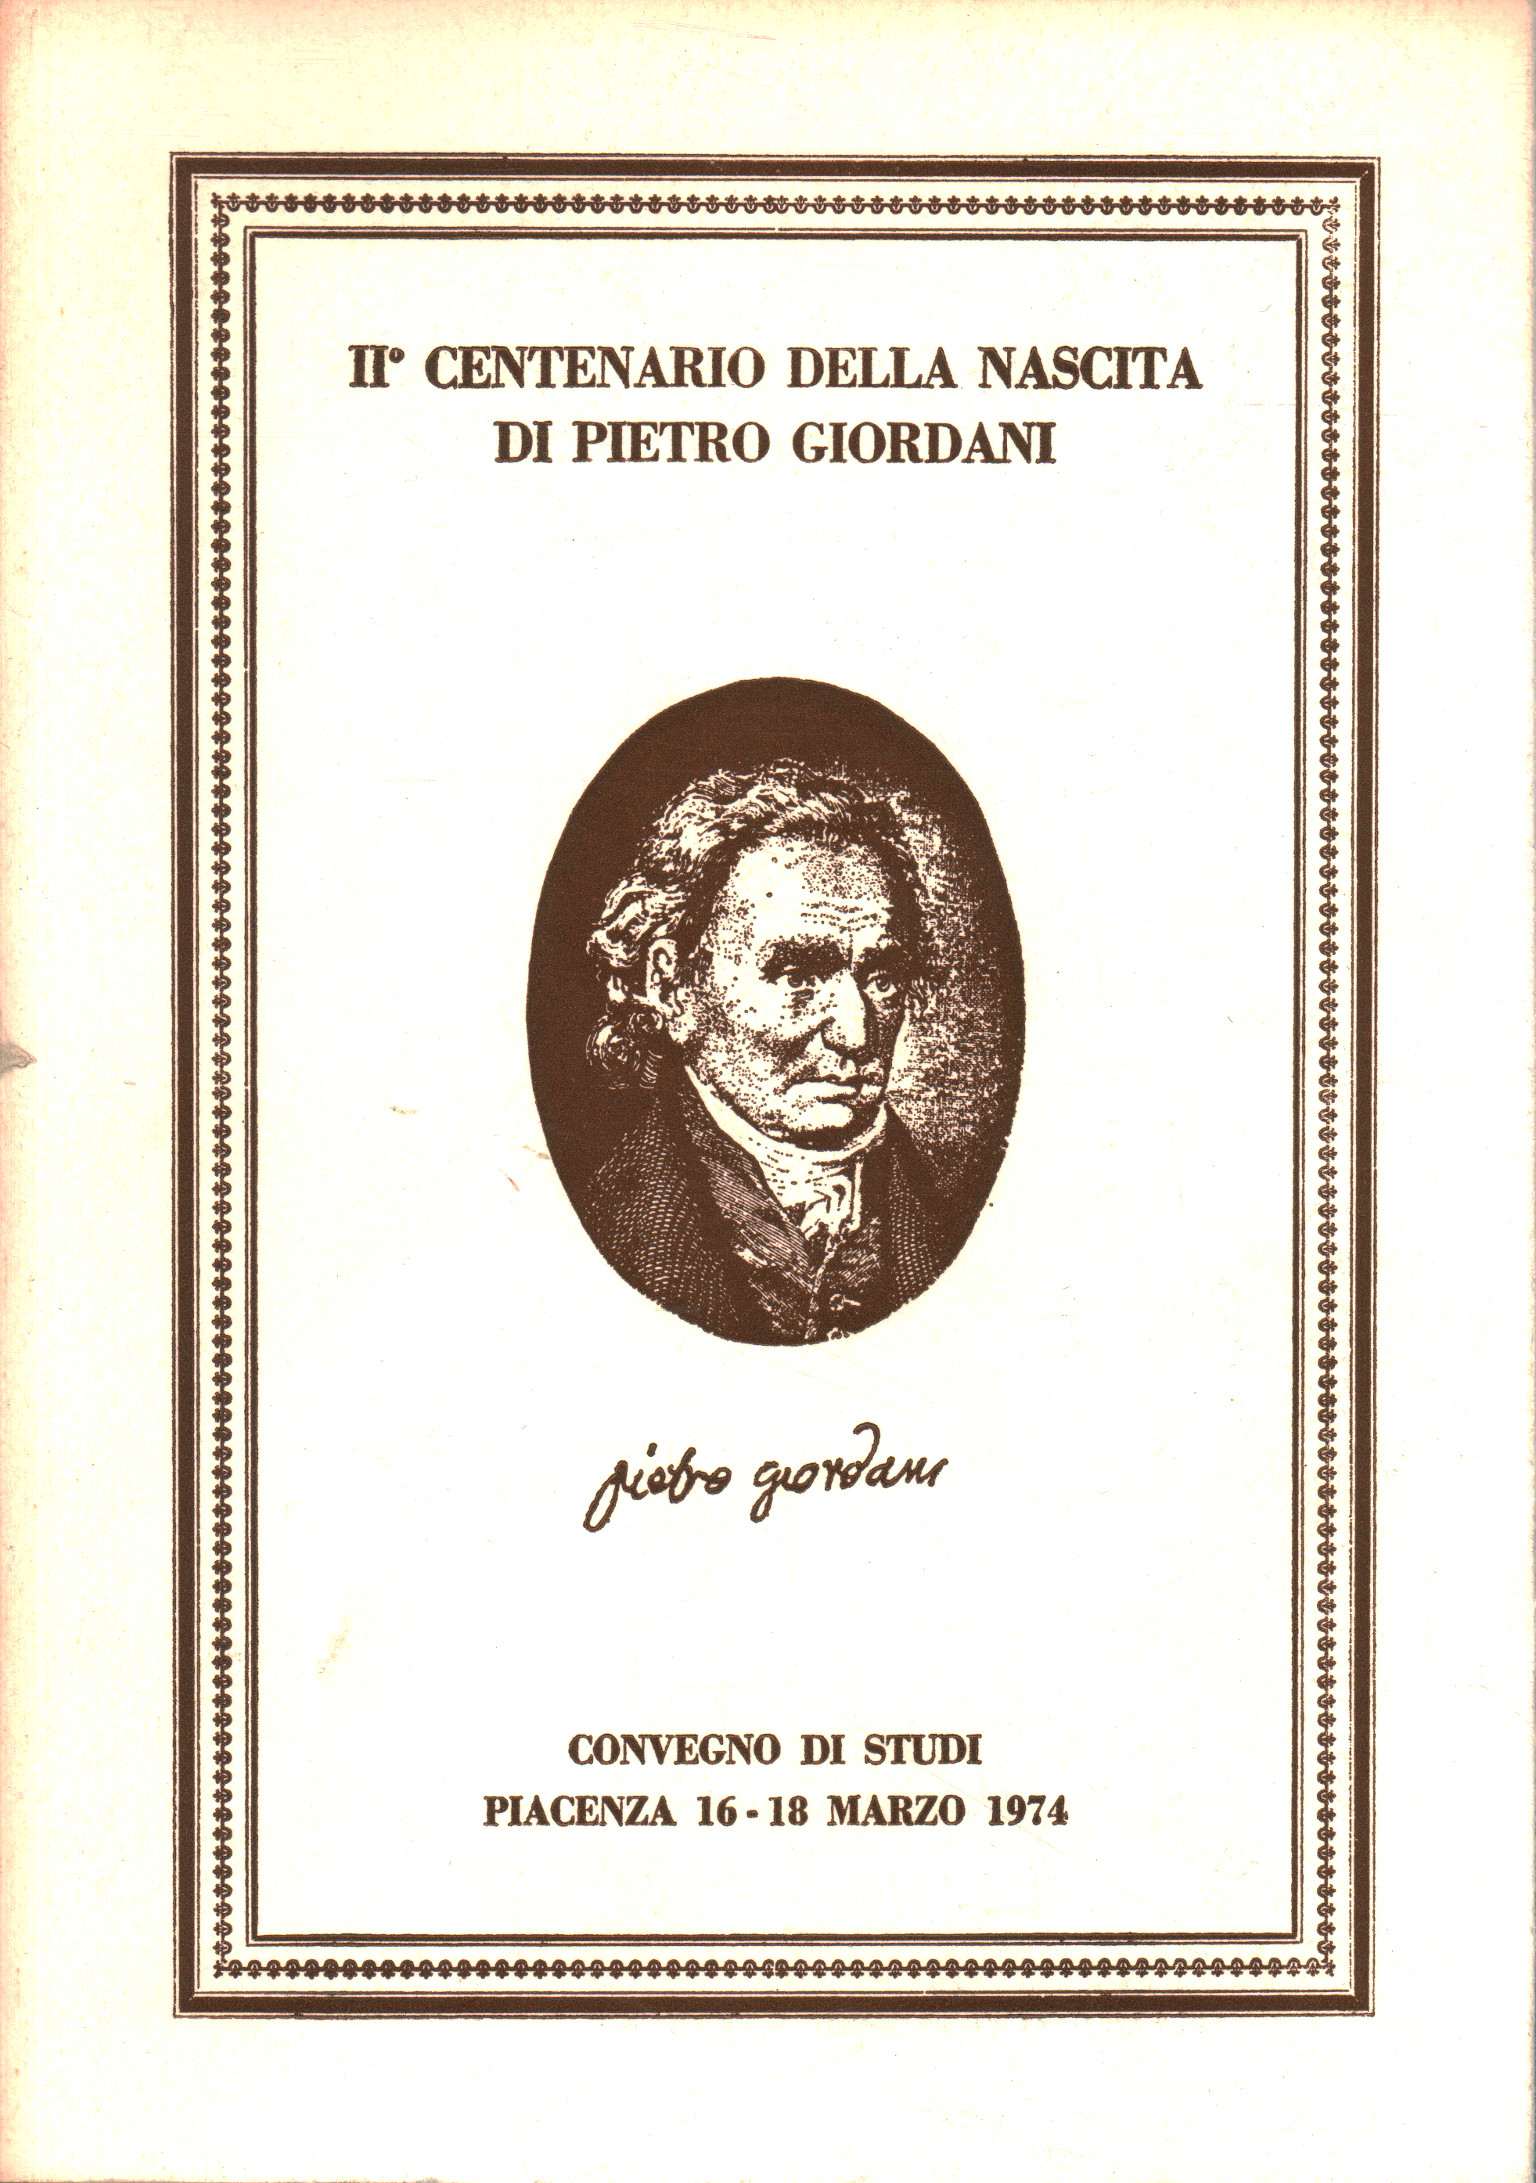 Pietro Giordani à l'occasion du deuxième centenaire de sa naissance, A.A.V.V.